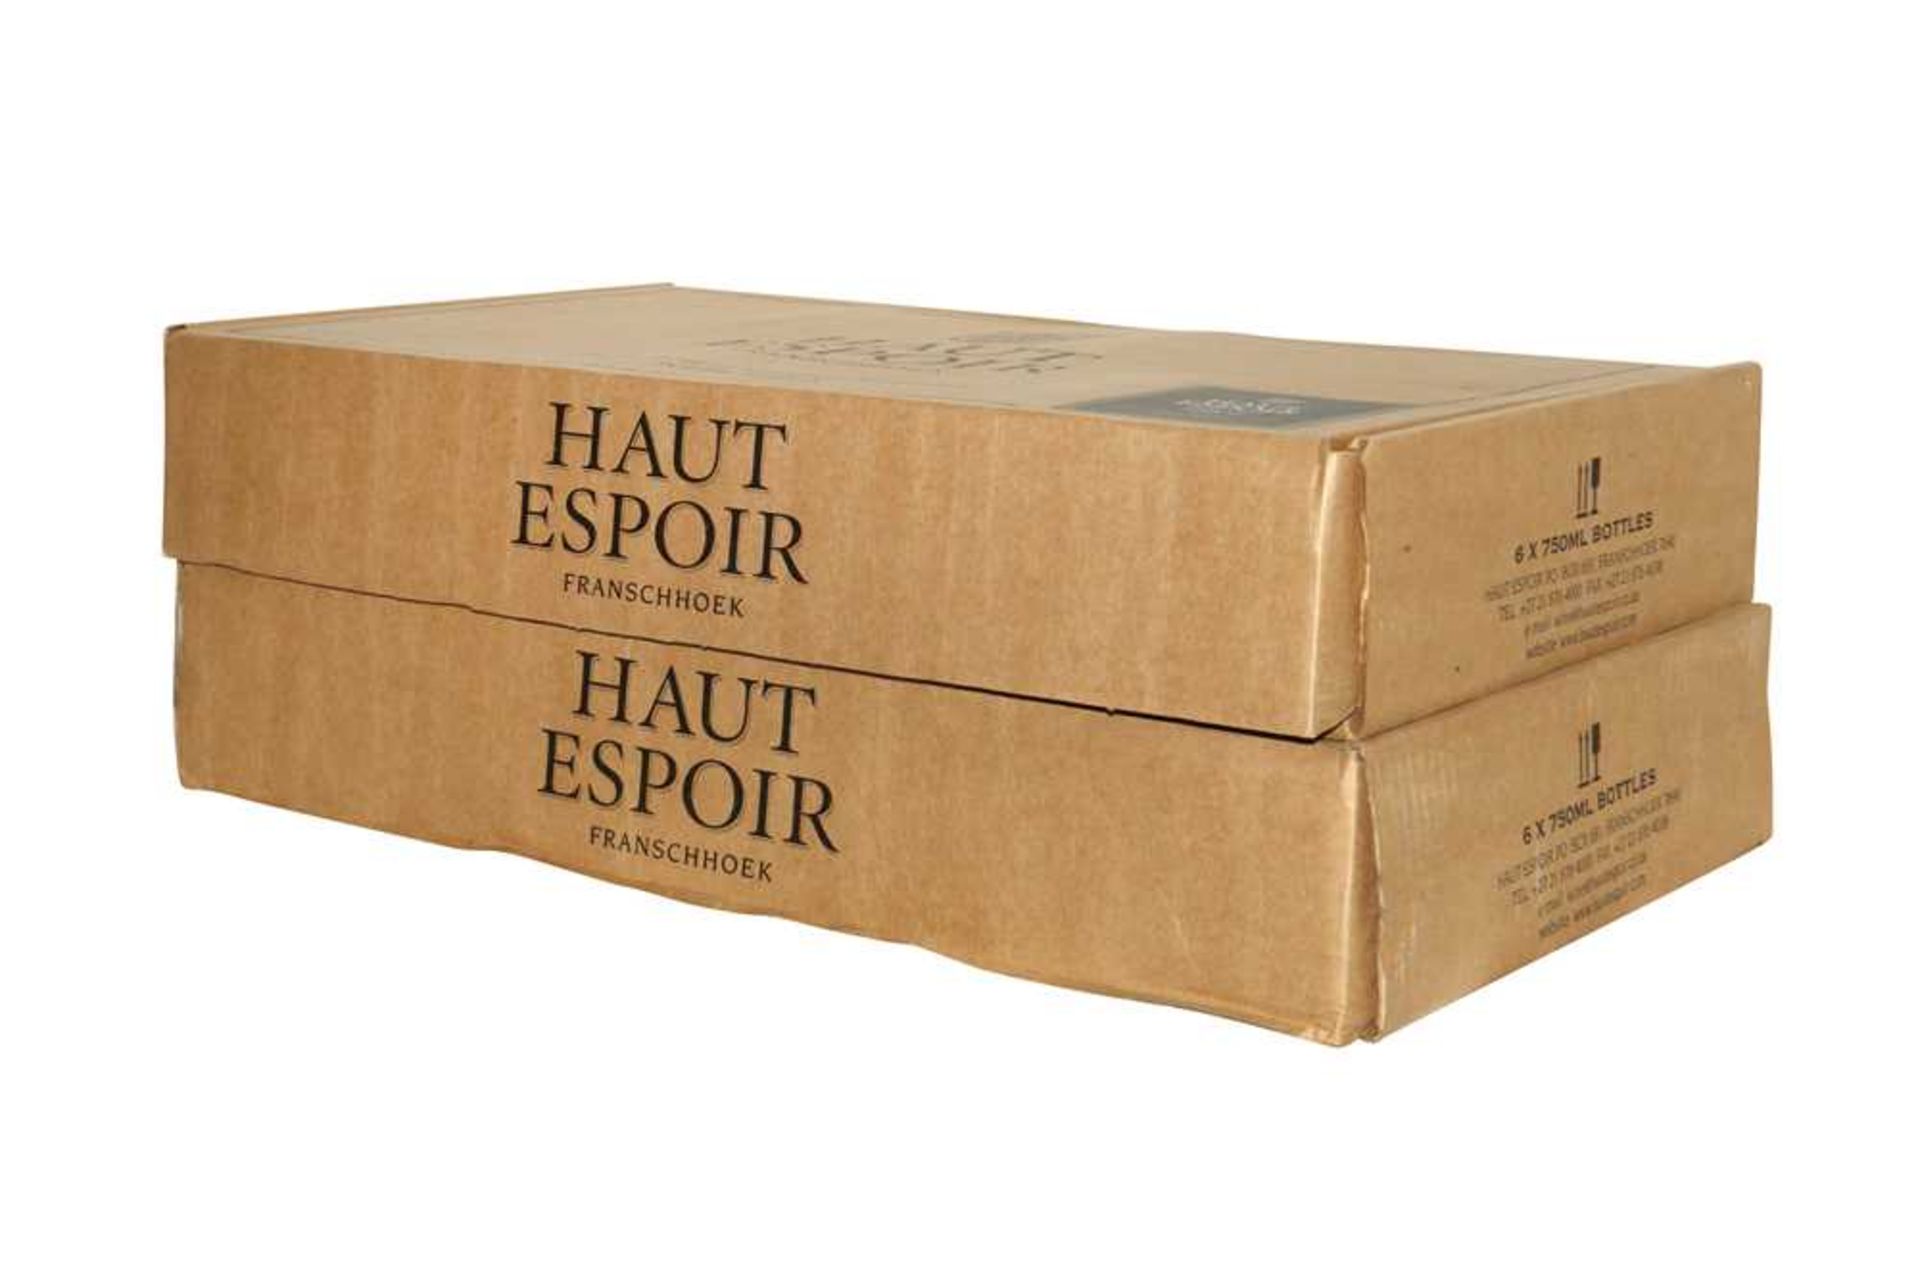 Haut Espoir Shiraz, Franschhoek, S. Africa, 2011, twelve bottles (boxed)